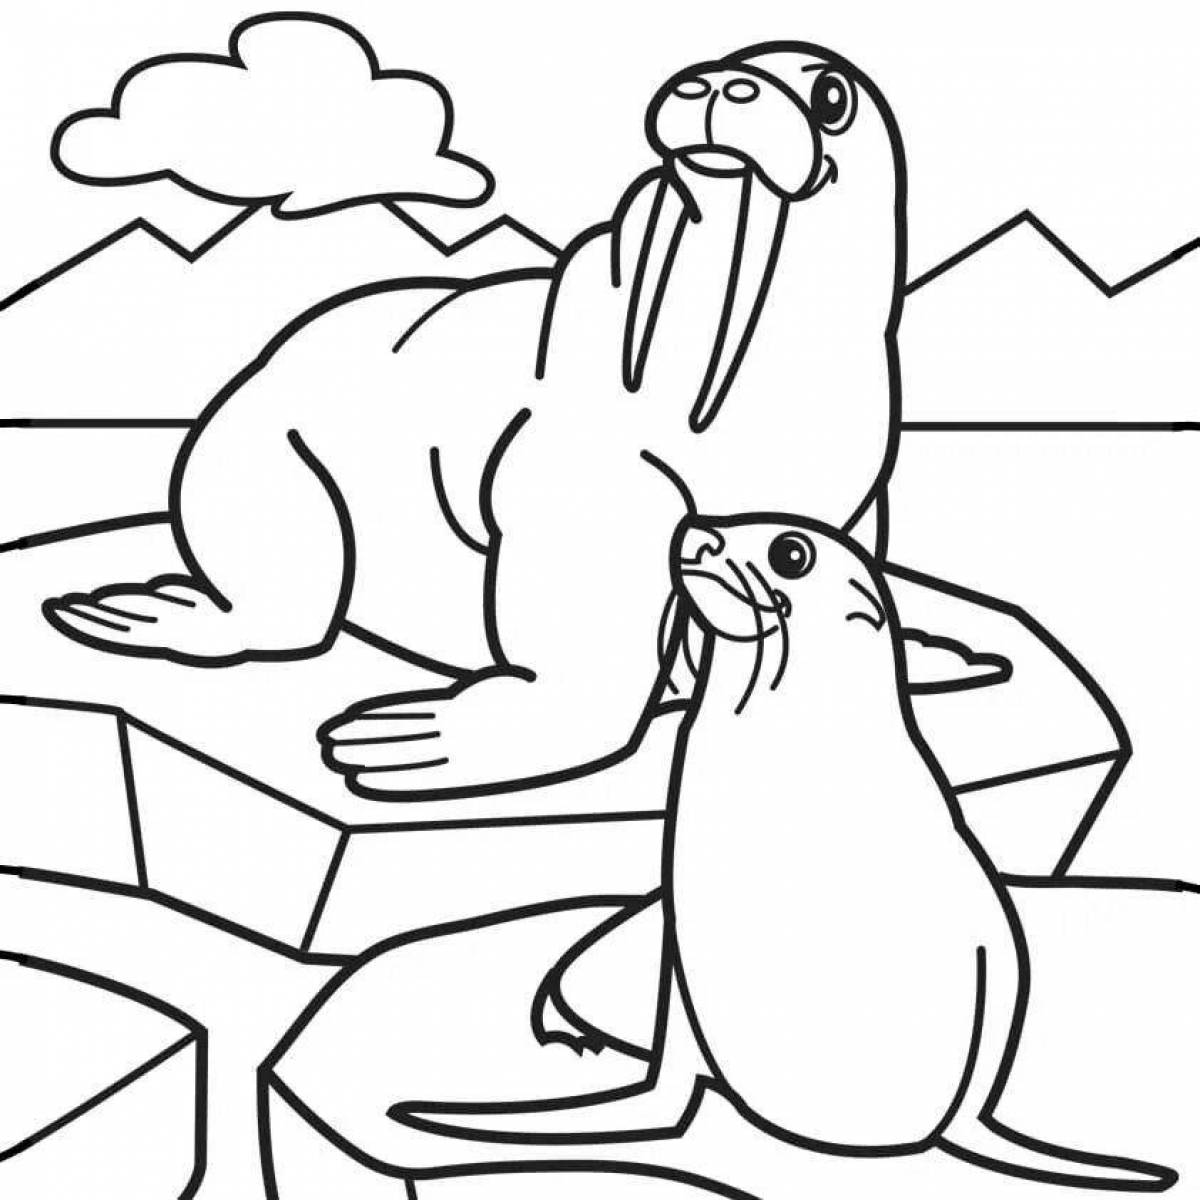 Playful Antarctic seal coloring page